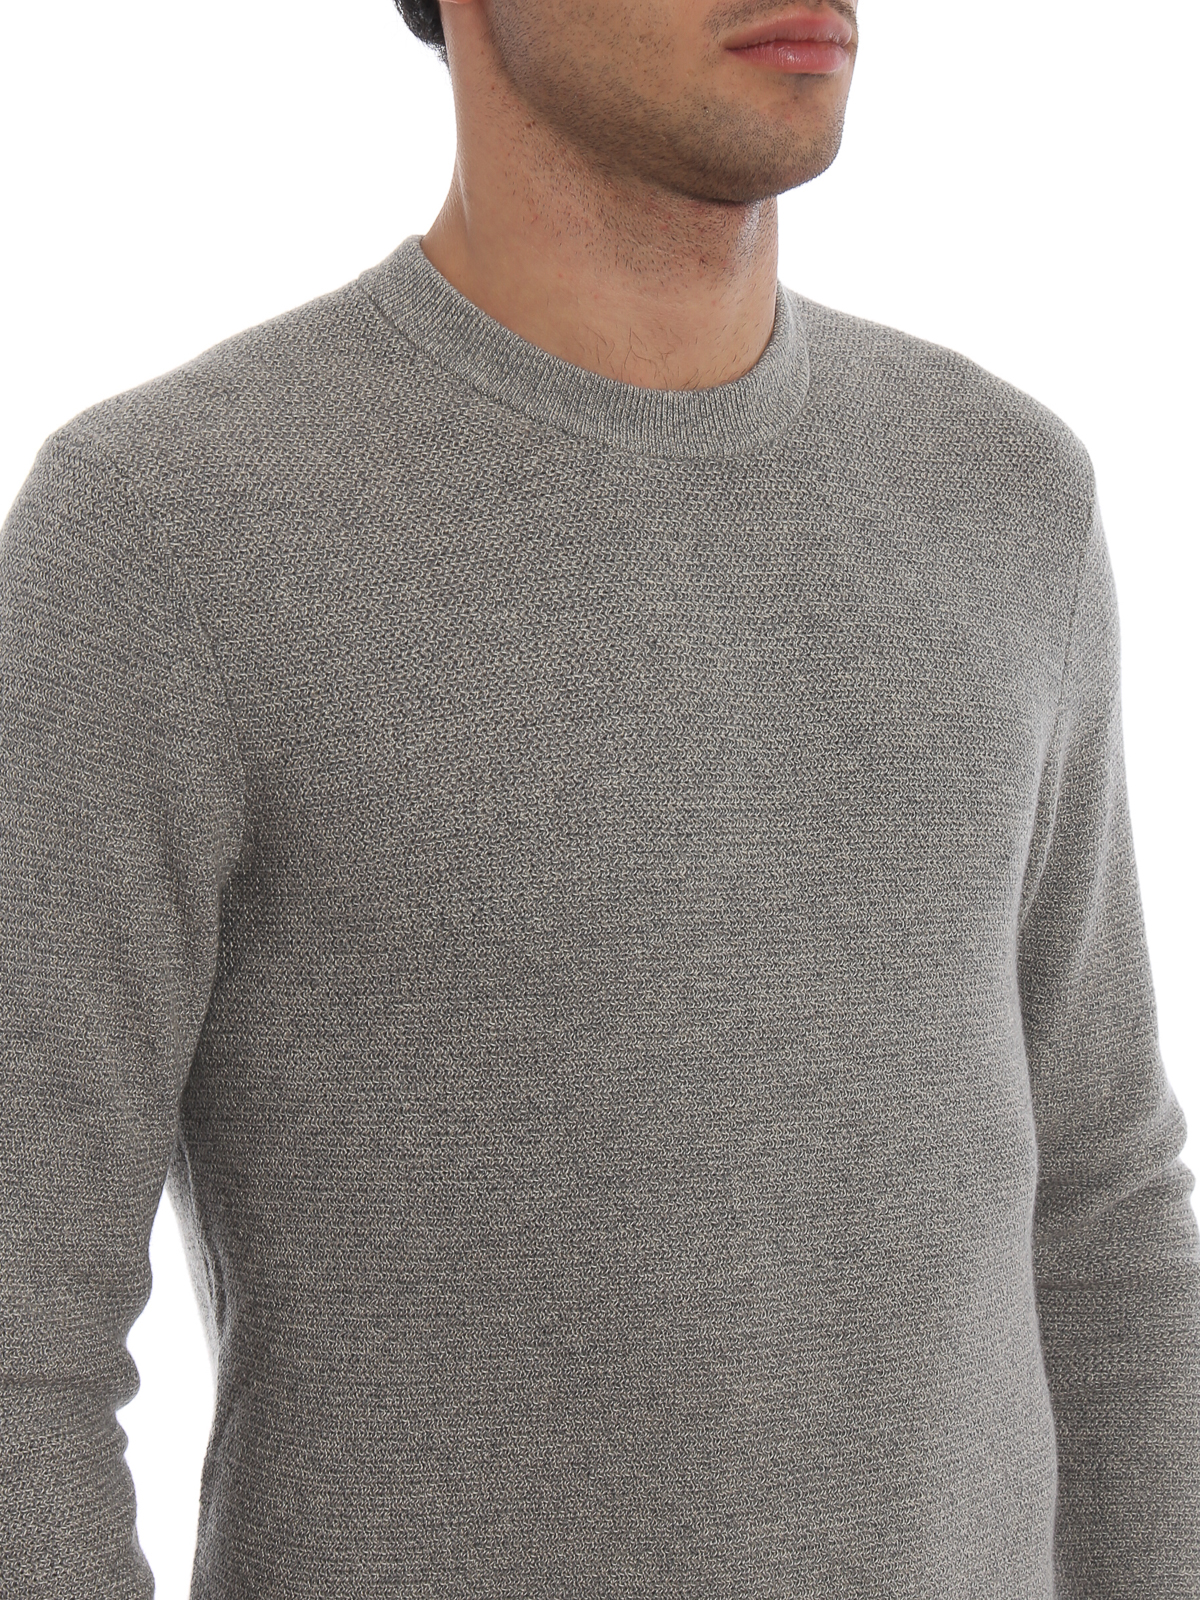 michael kors grey sweater